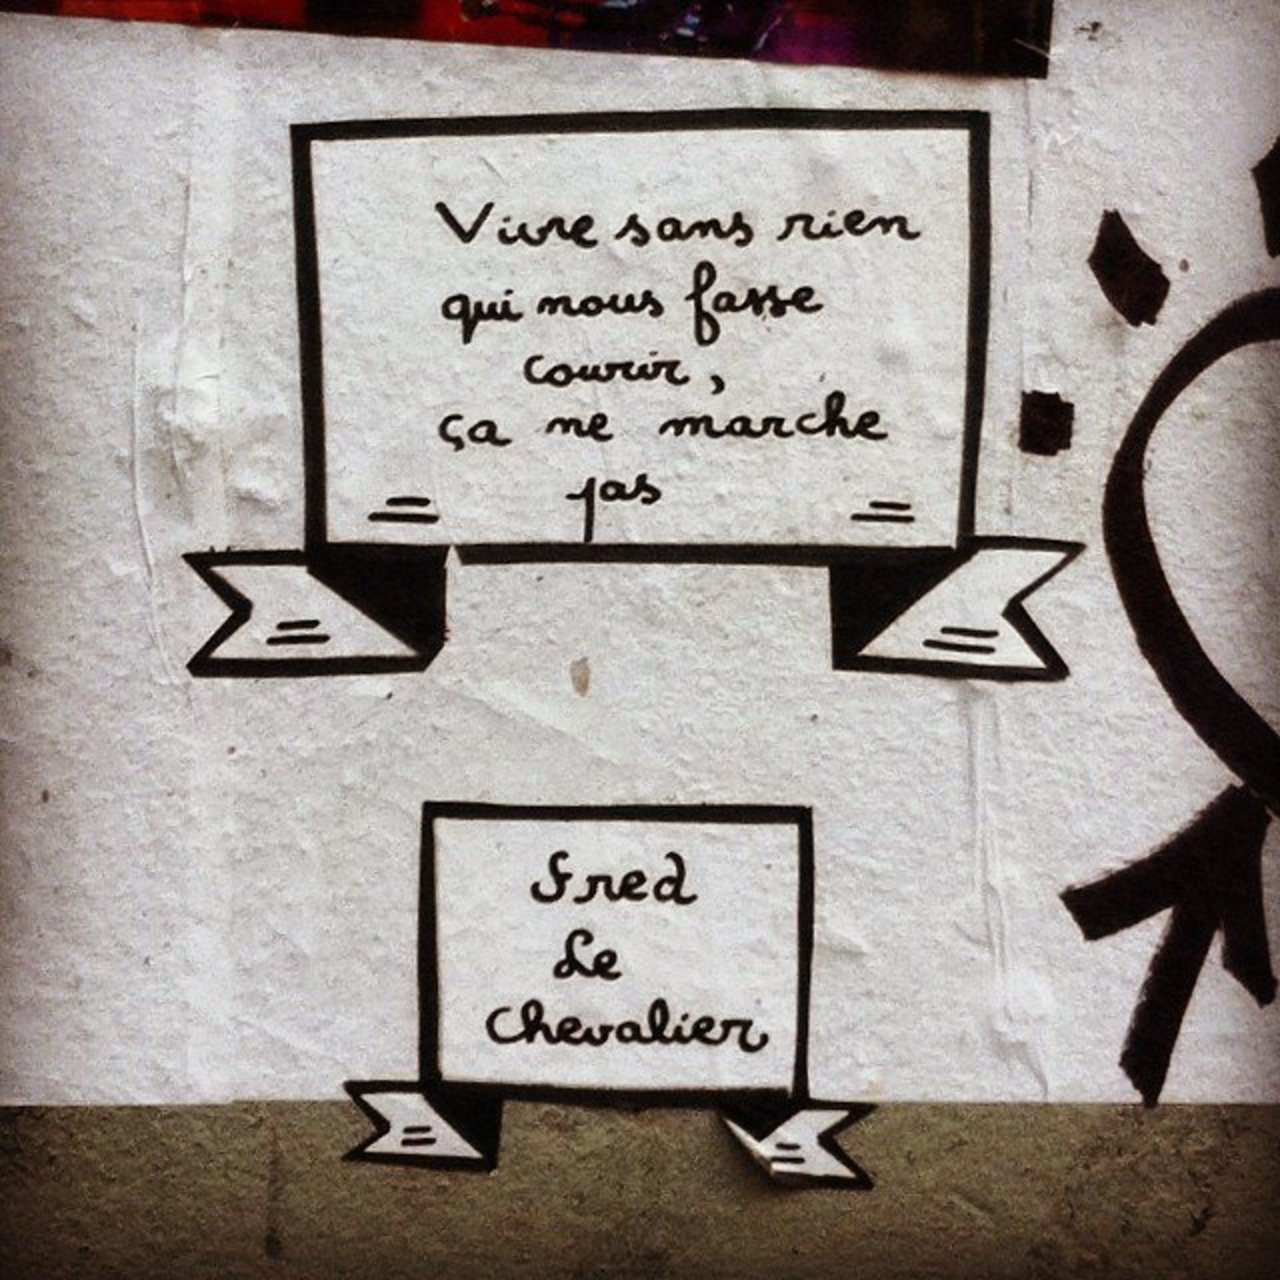 #Paris #graffiti photo by @benstagramin http://ift.tt/1PJyF0o #StreetArt https://t.co/2FM16IIt8l